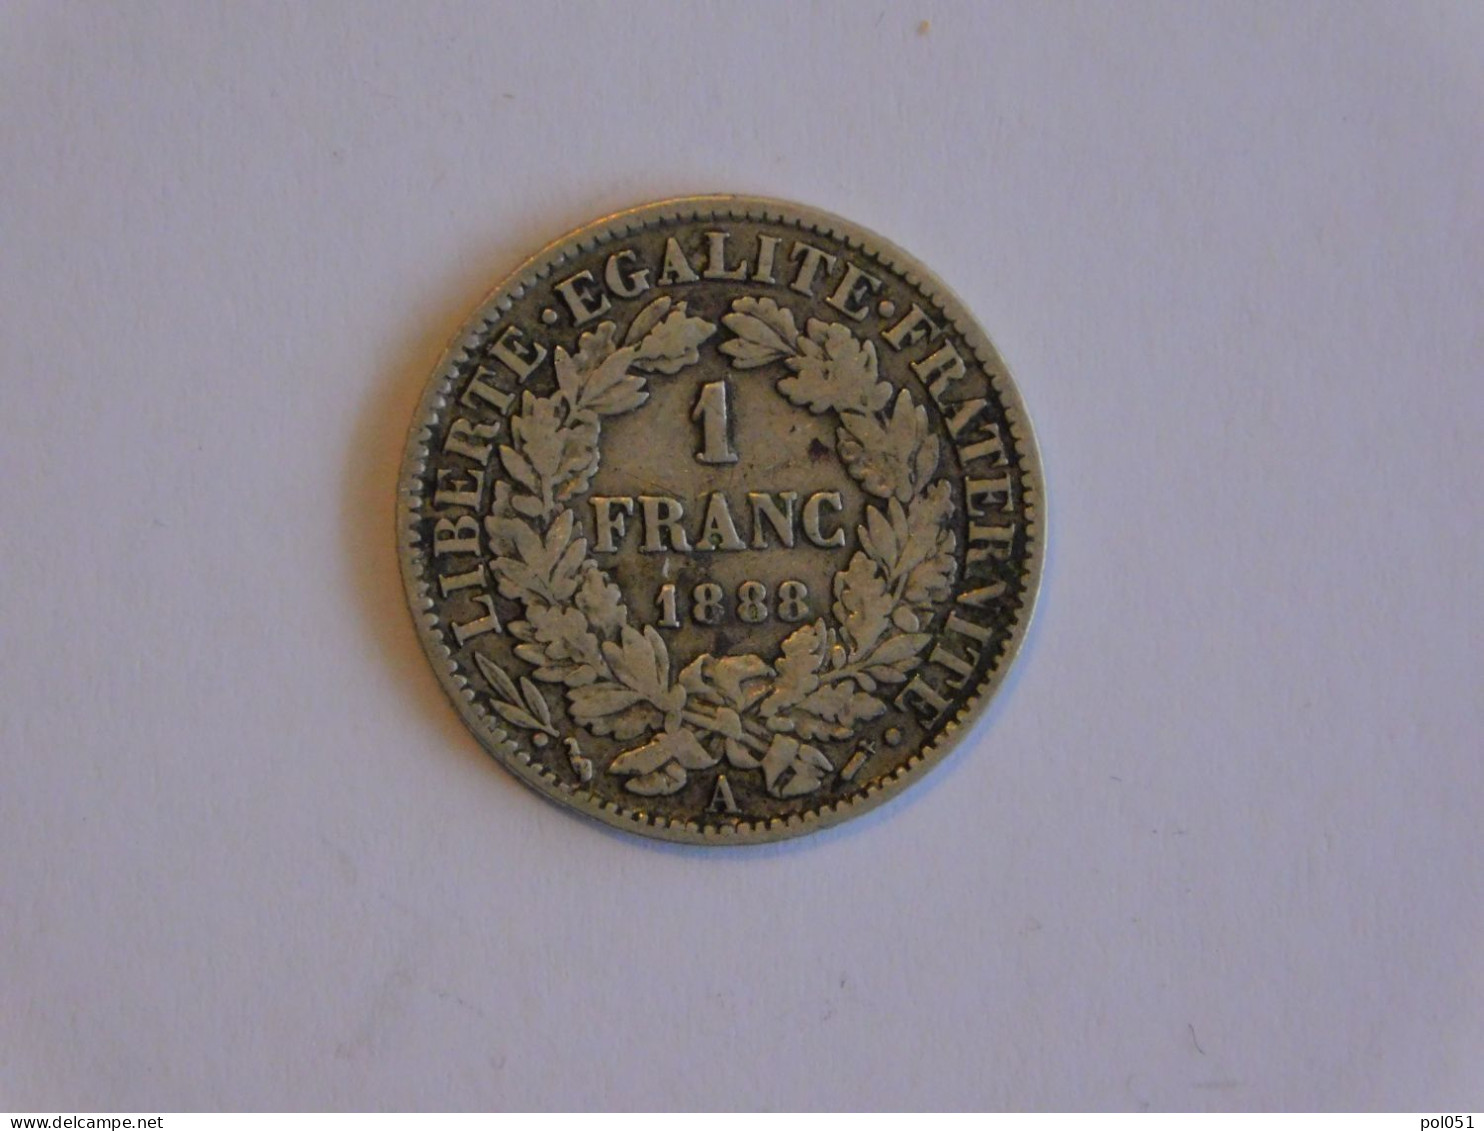 FRANCE 1 Franc 1888 A - Silver, Argent Franc - 1 Franc